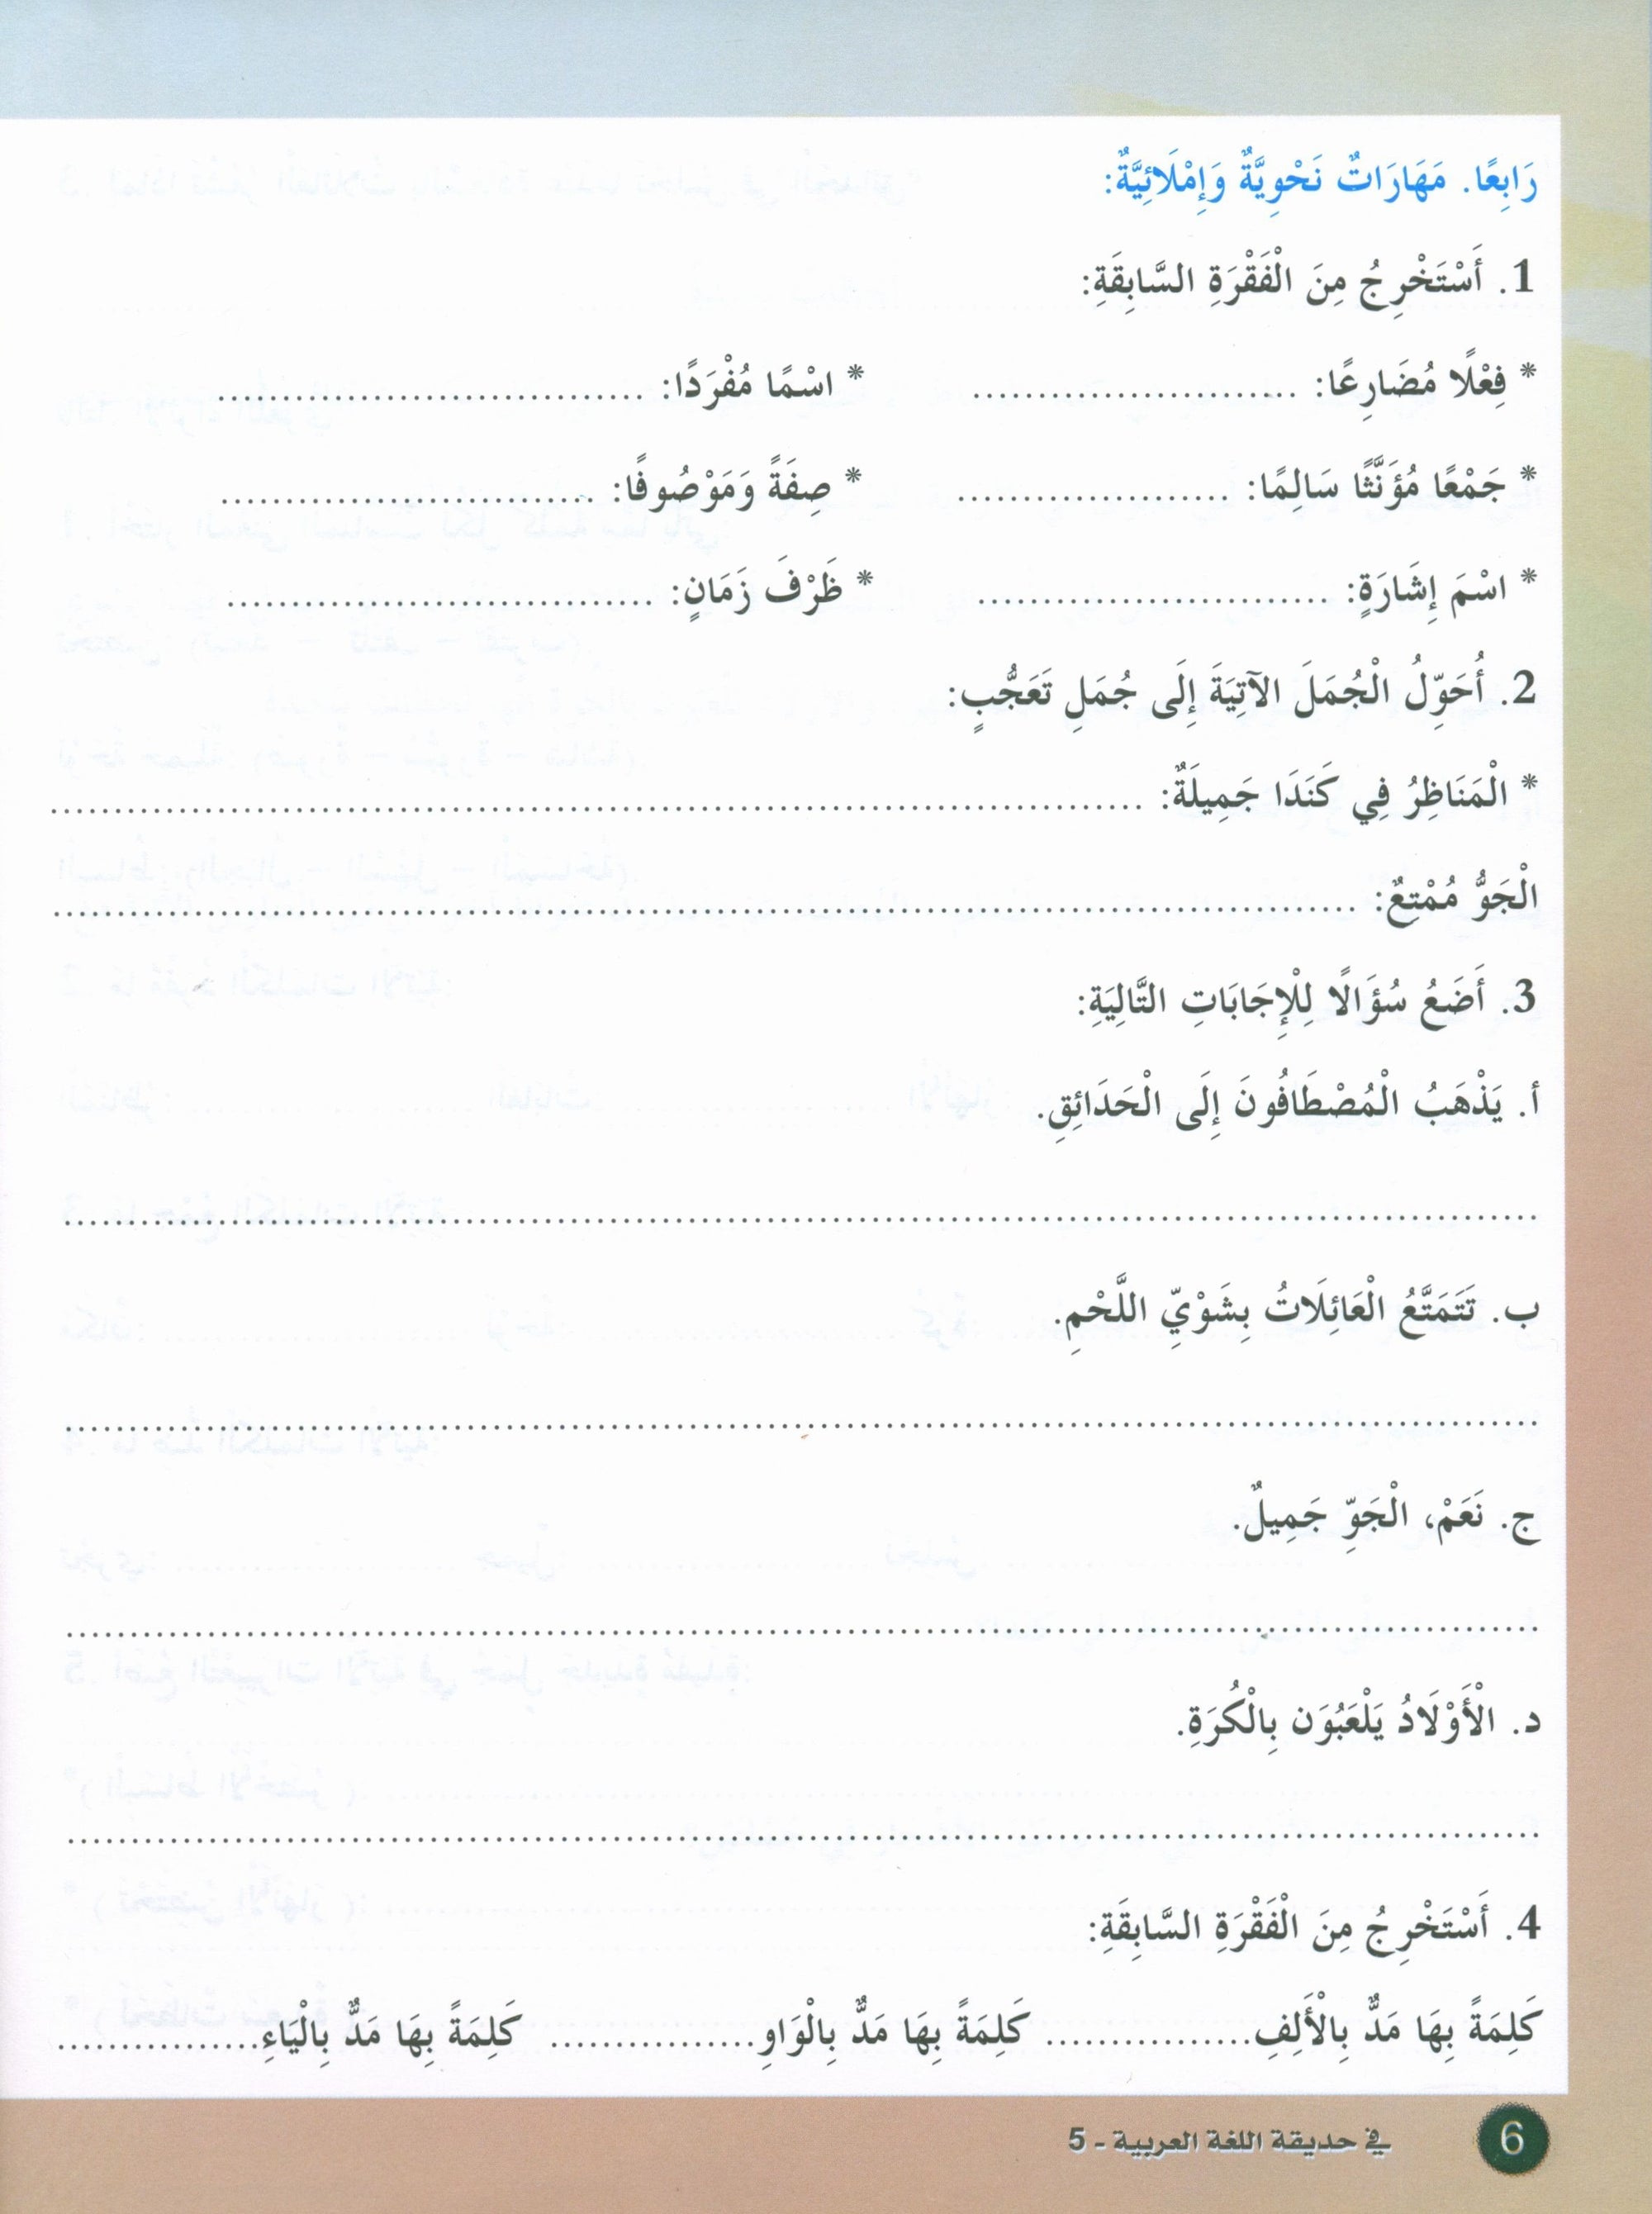 In the Arabic Garden Textbook Level 5 في حديقة اللغة العربية